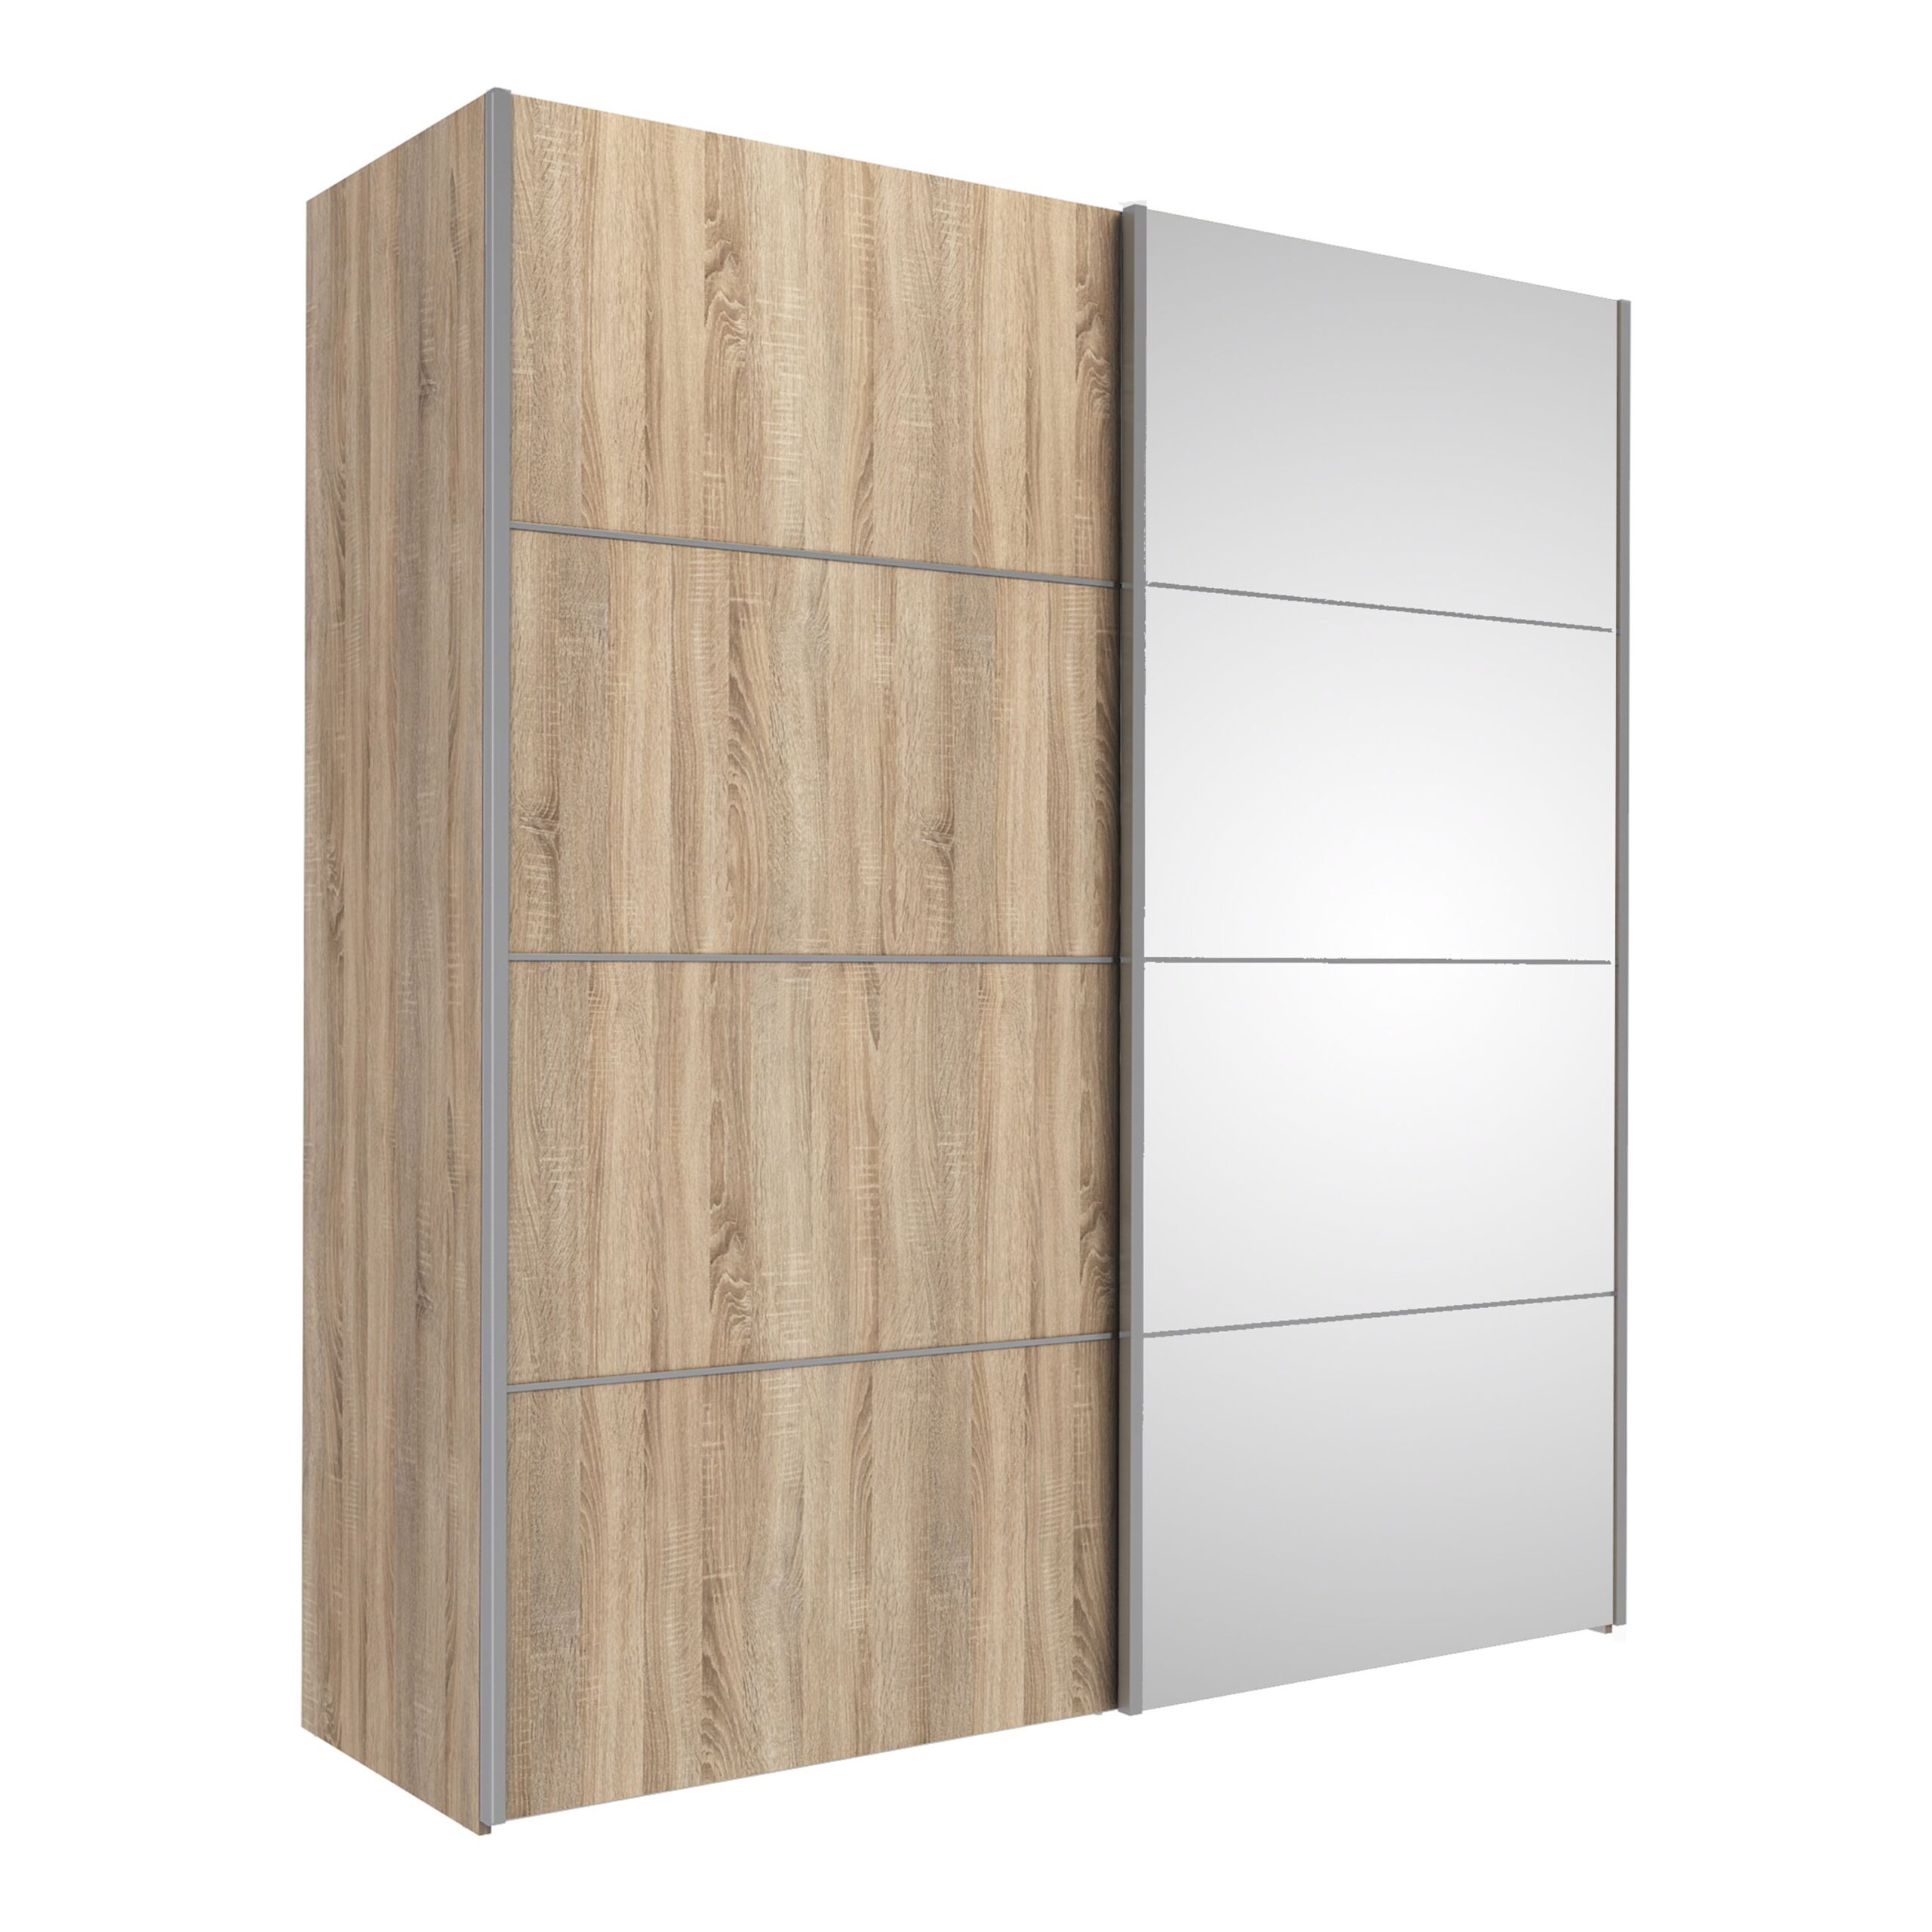 Phillipe Sliding Wardrobe 180cm Oak Frame - Oak/Mirror Doors